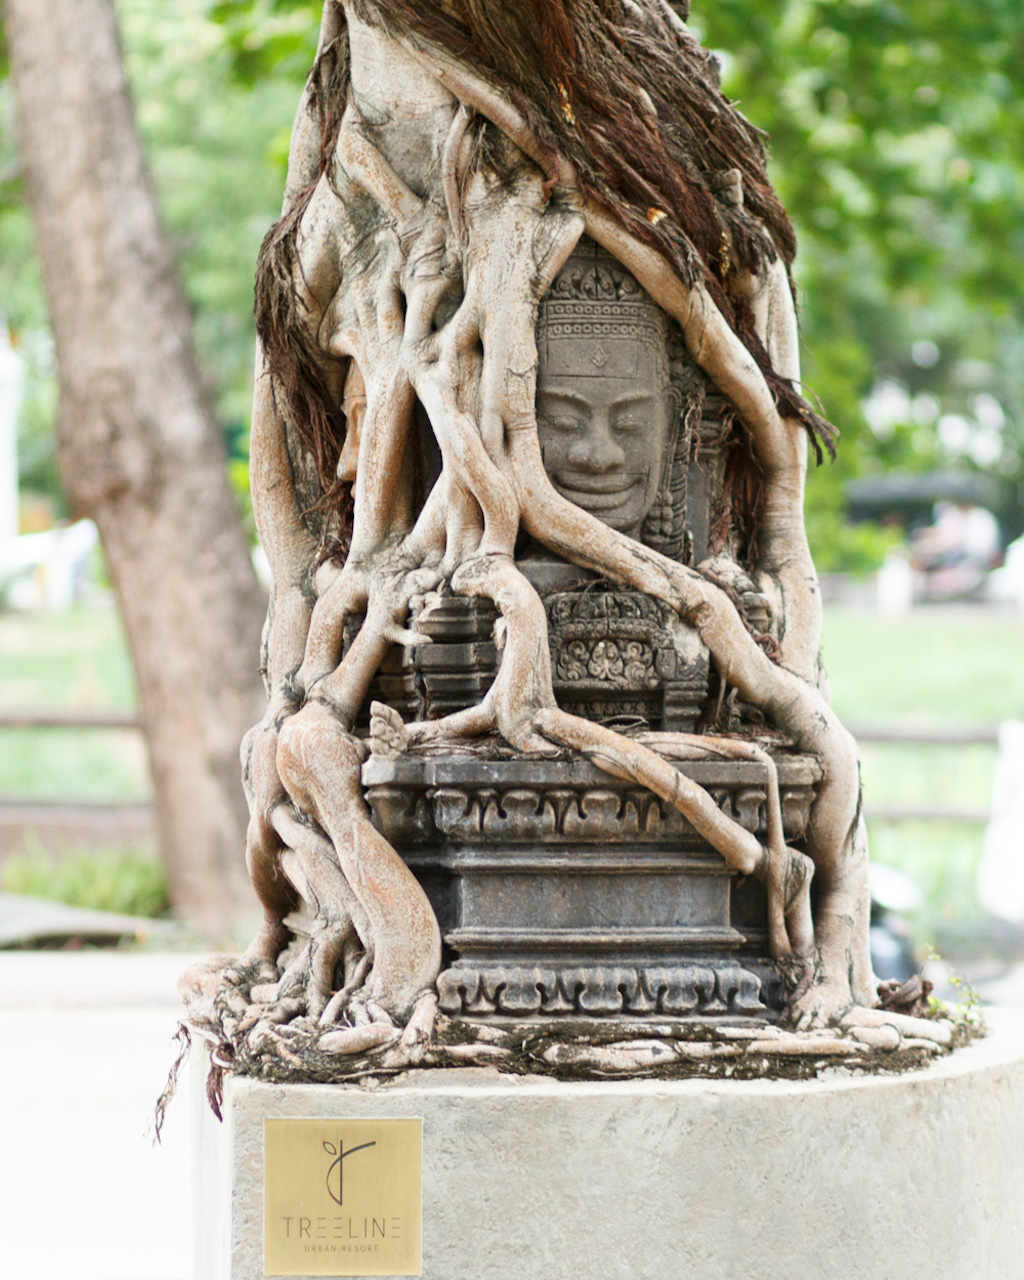 Siem reap art feature A miniature Bayon replica at Treeline